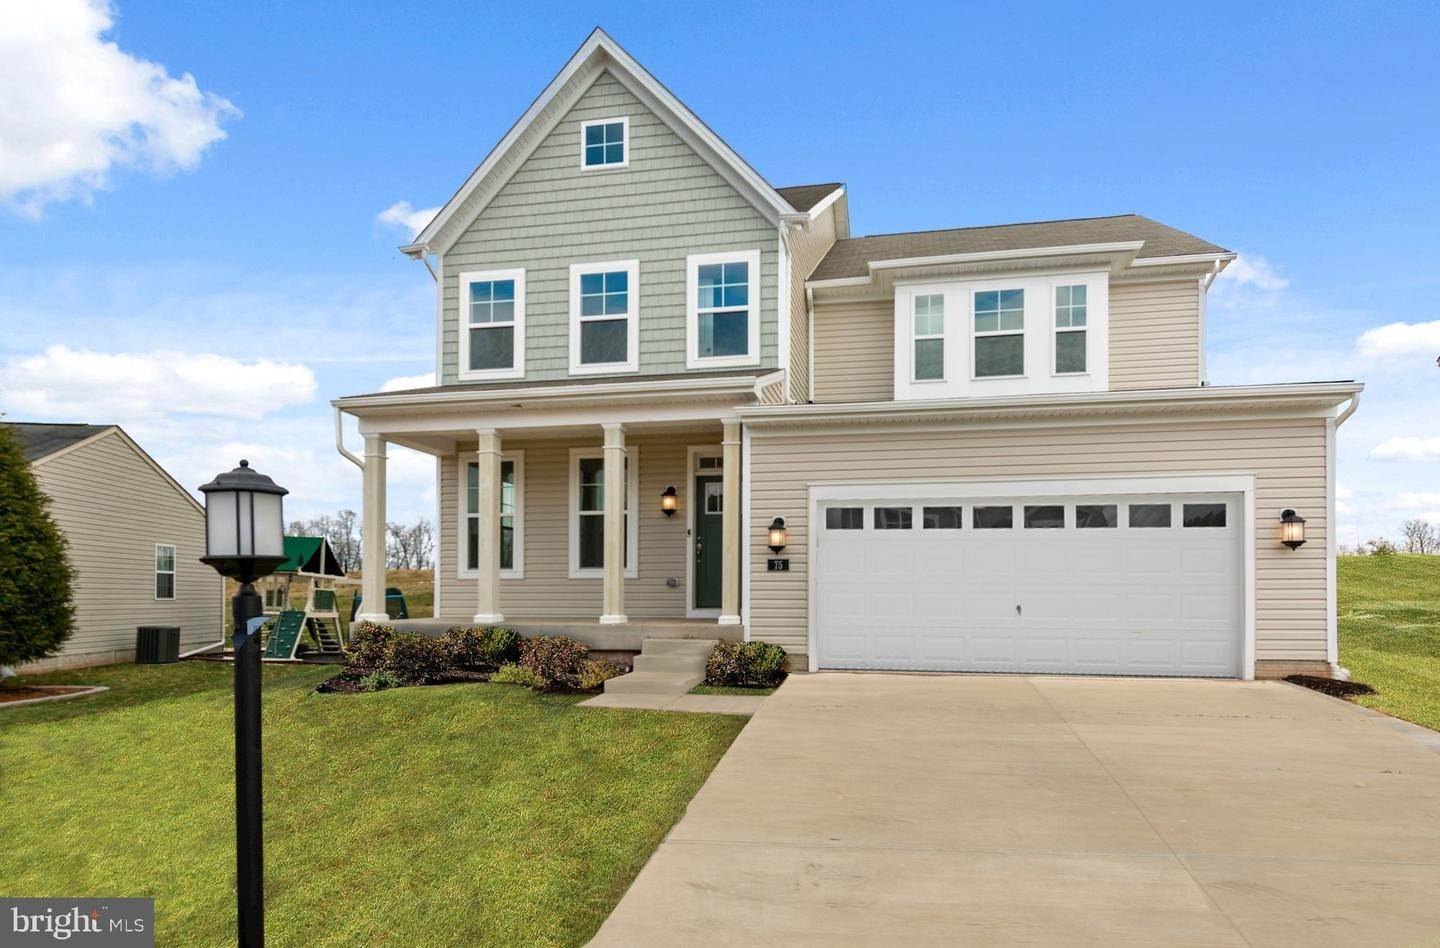 Single Family Homes για την Πώληση στο Jeffersonton, Βιρτζινια 22724 Ηνωμένες Πολιτείες